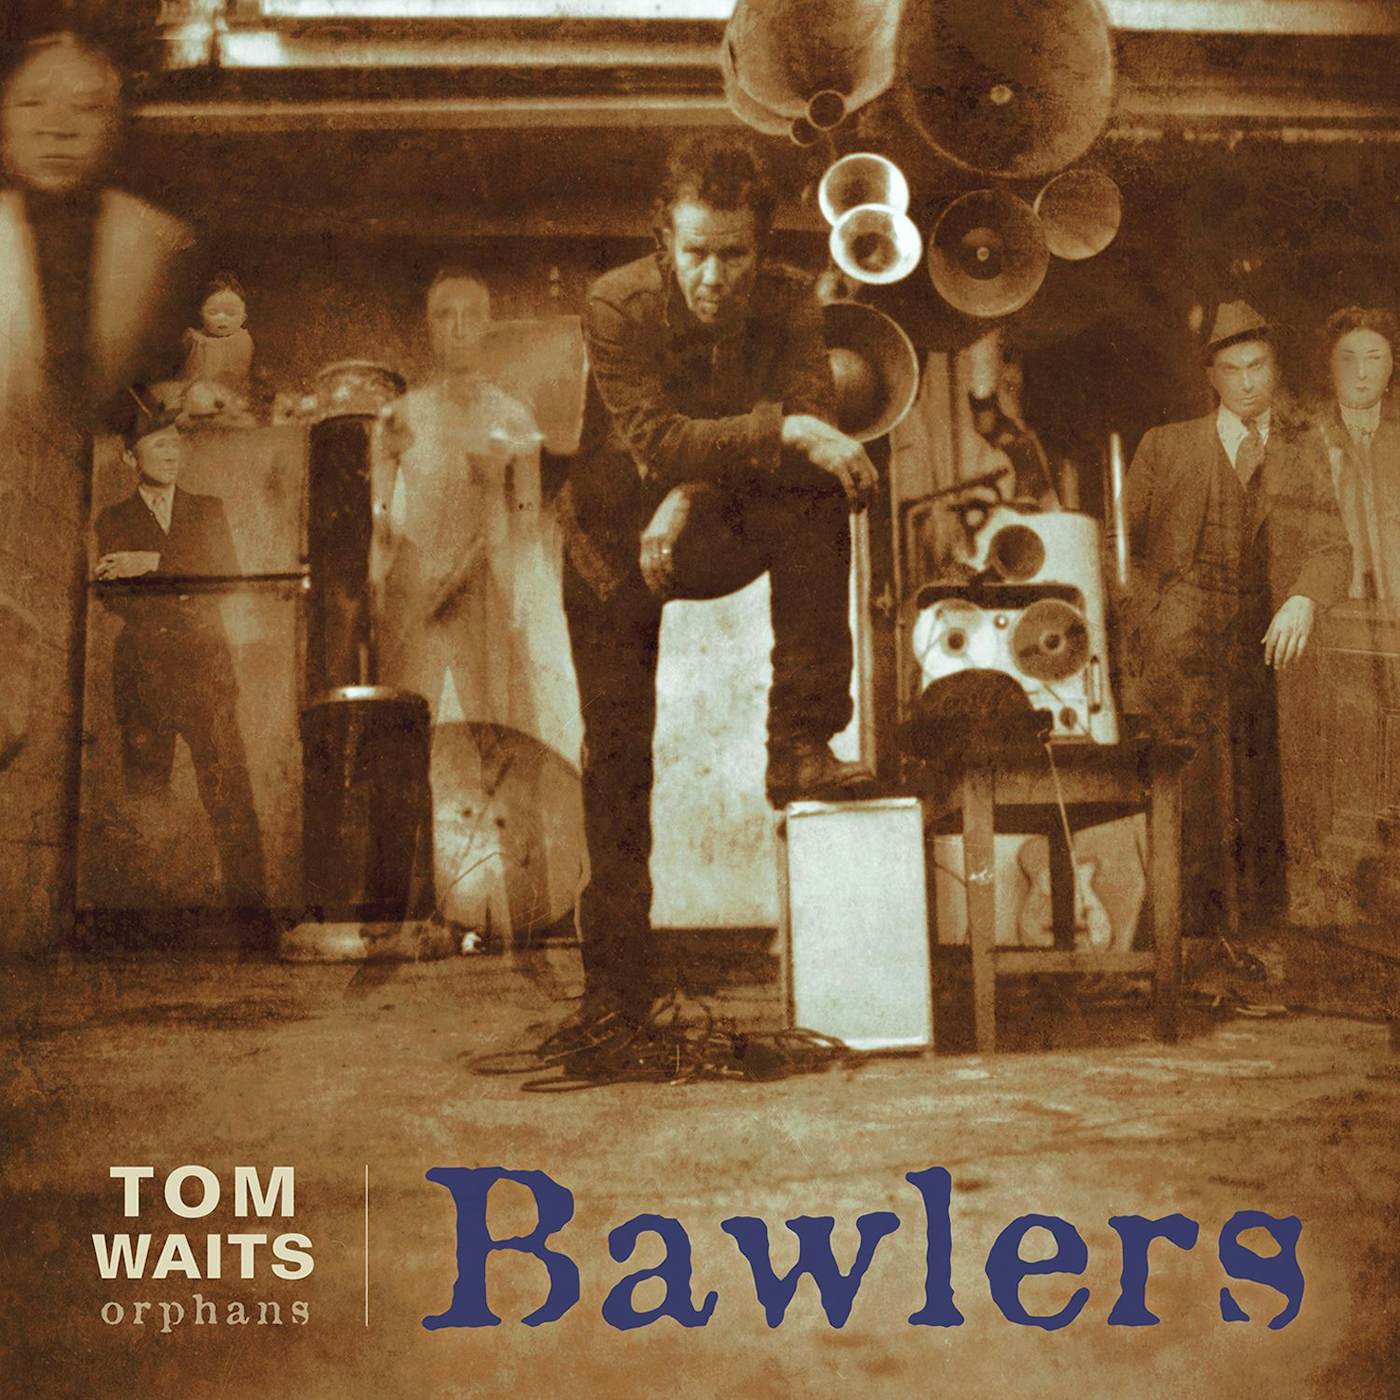 Tom Waits Bawlers Vinyl Record